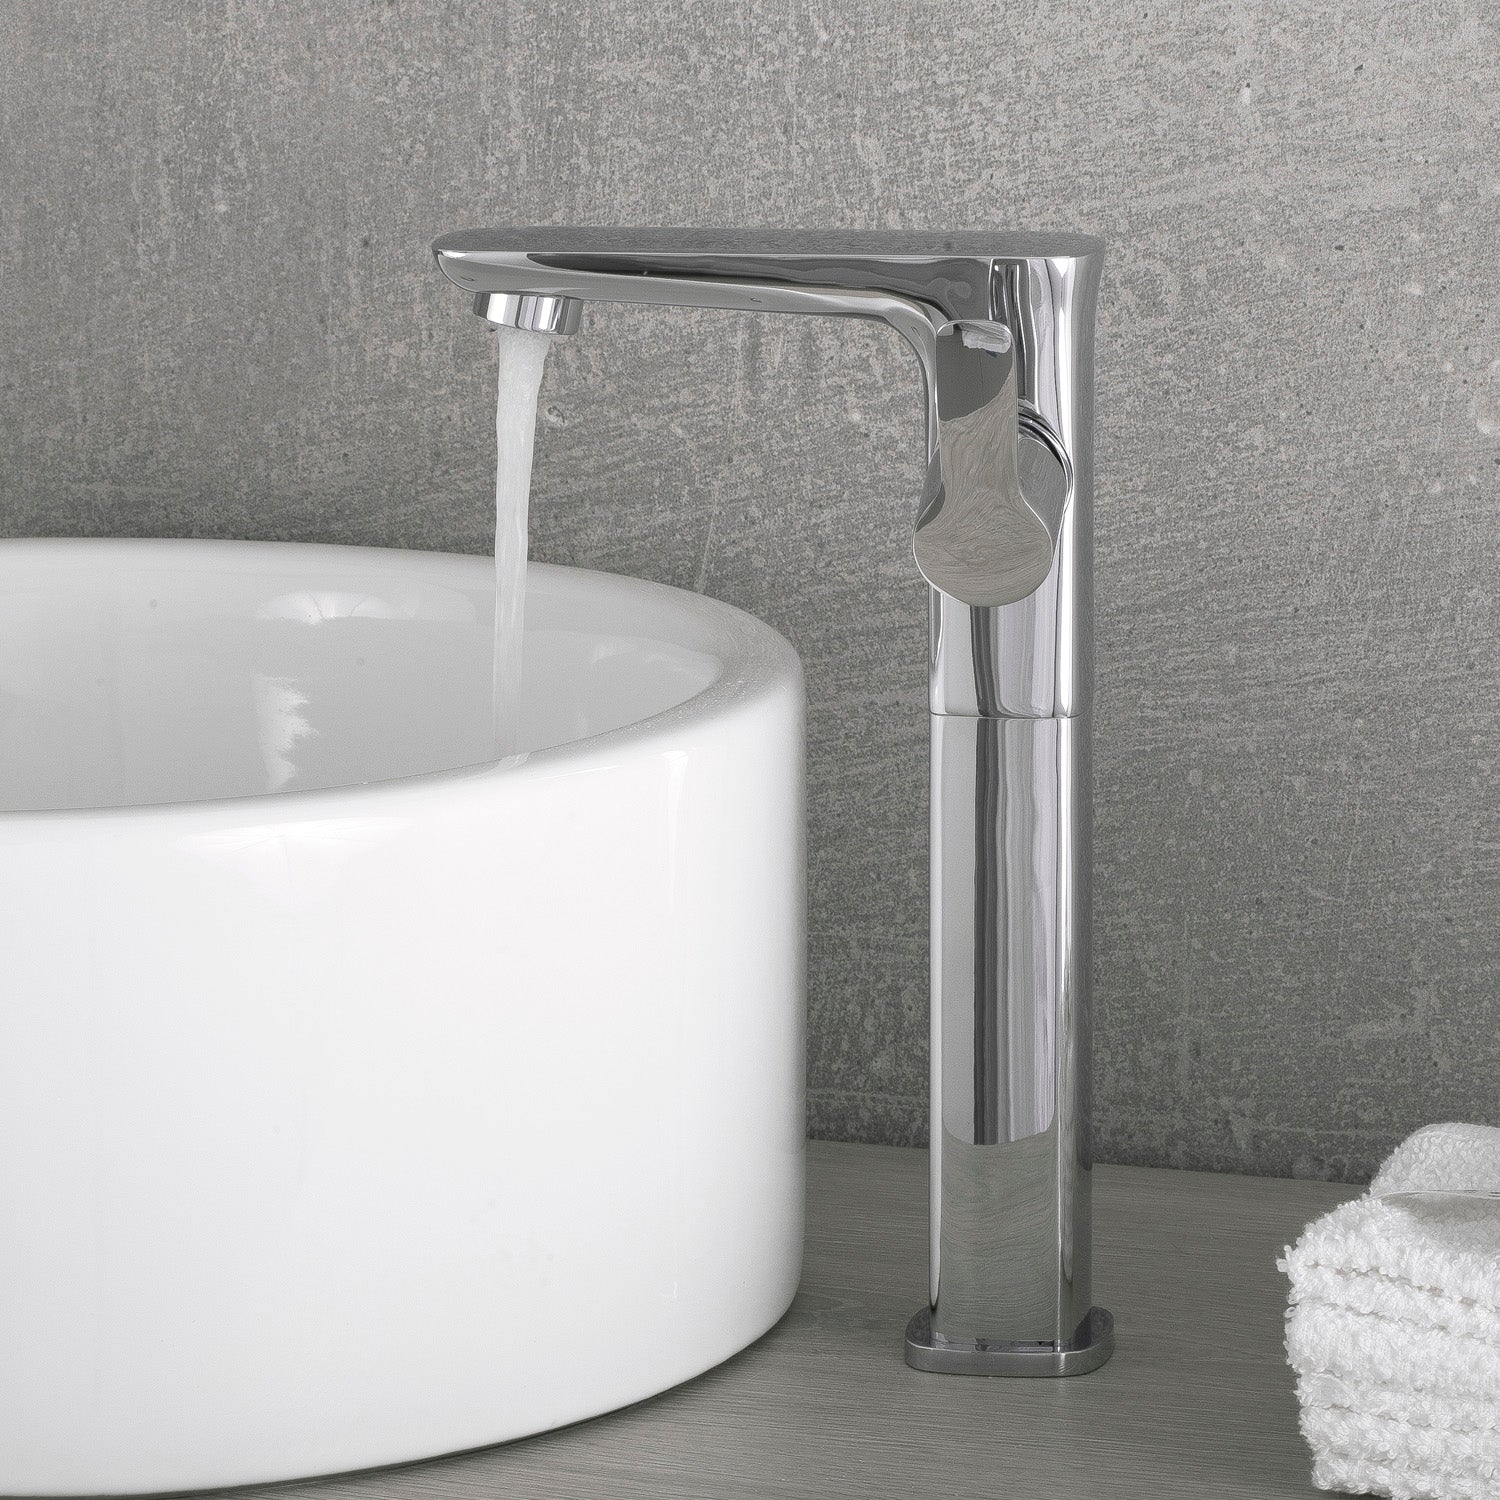 DAX Single Handle Vessel Sink Bathroom Faucet, Brass Body, Chrome Finish, 4-3/4 x 10-1/4 Inches (DAX-9883B)